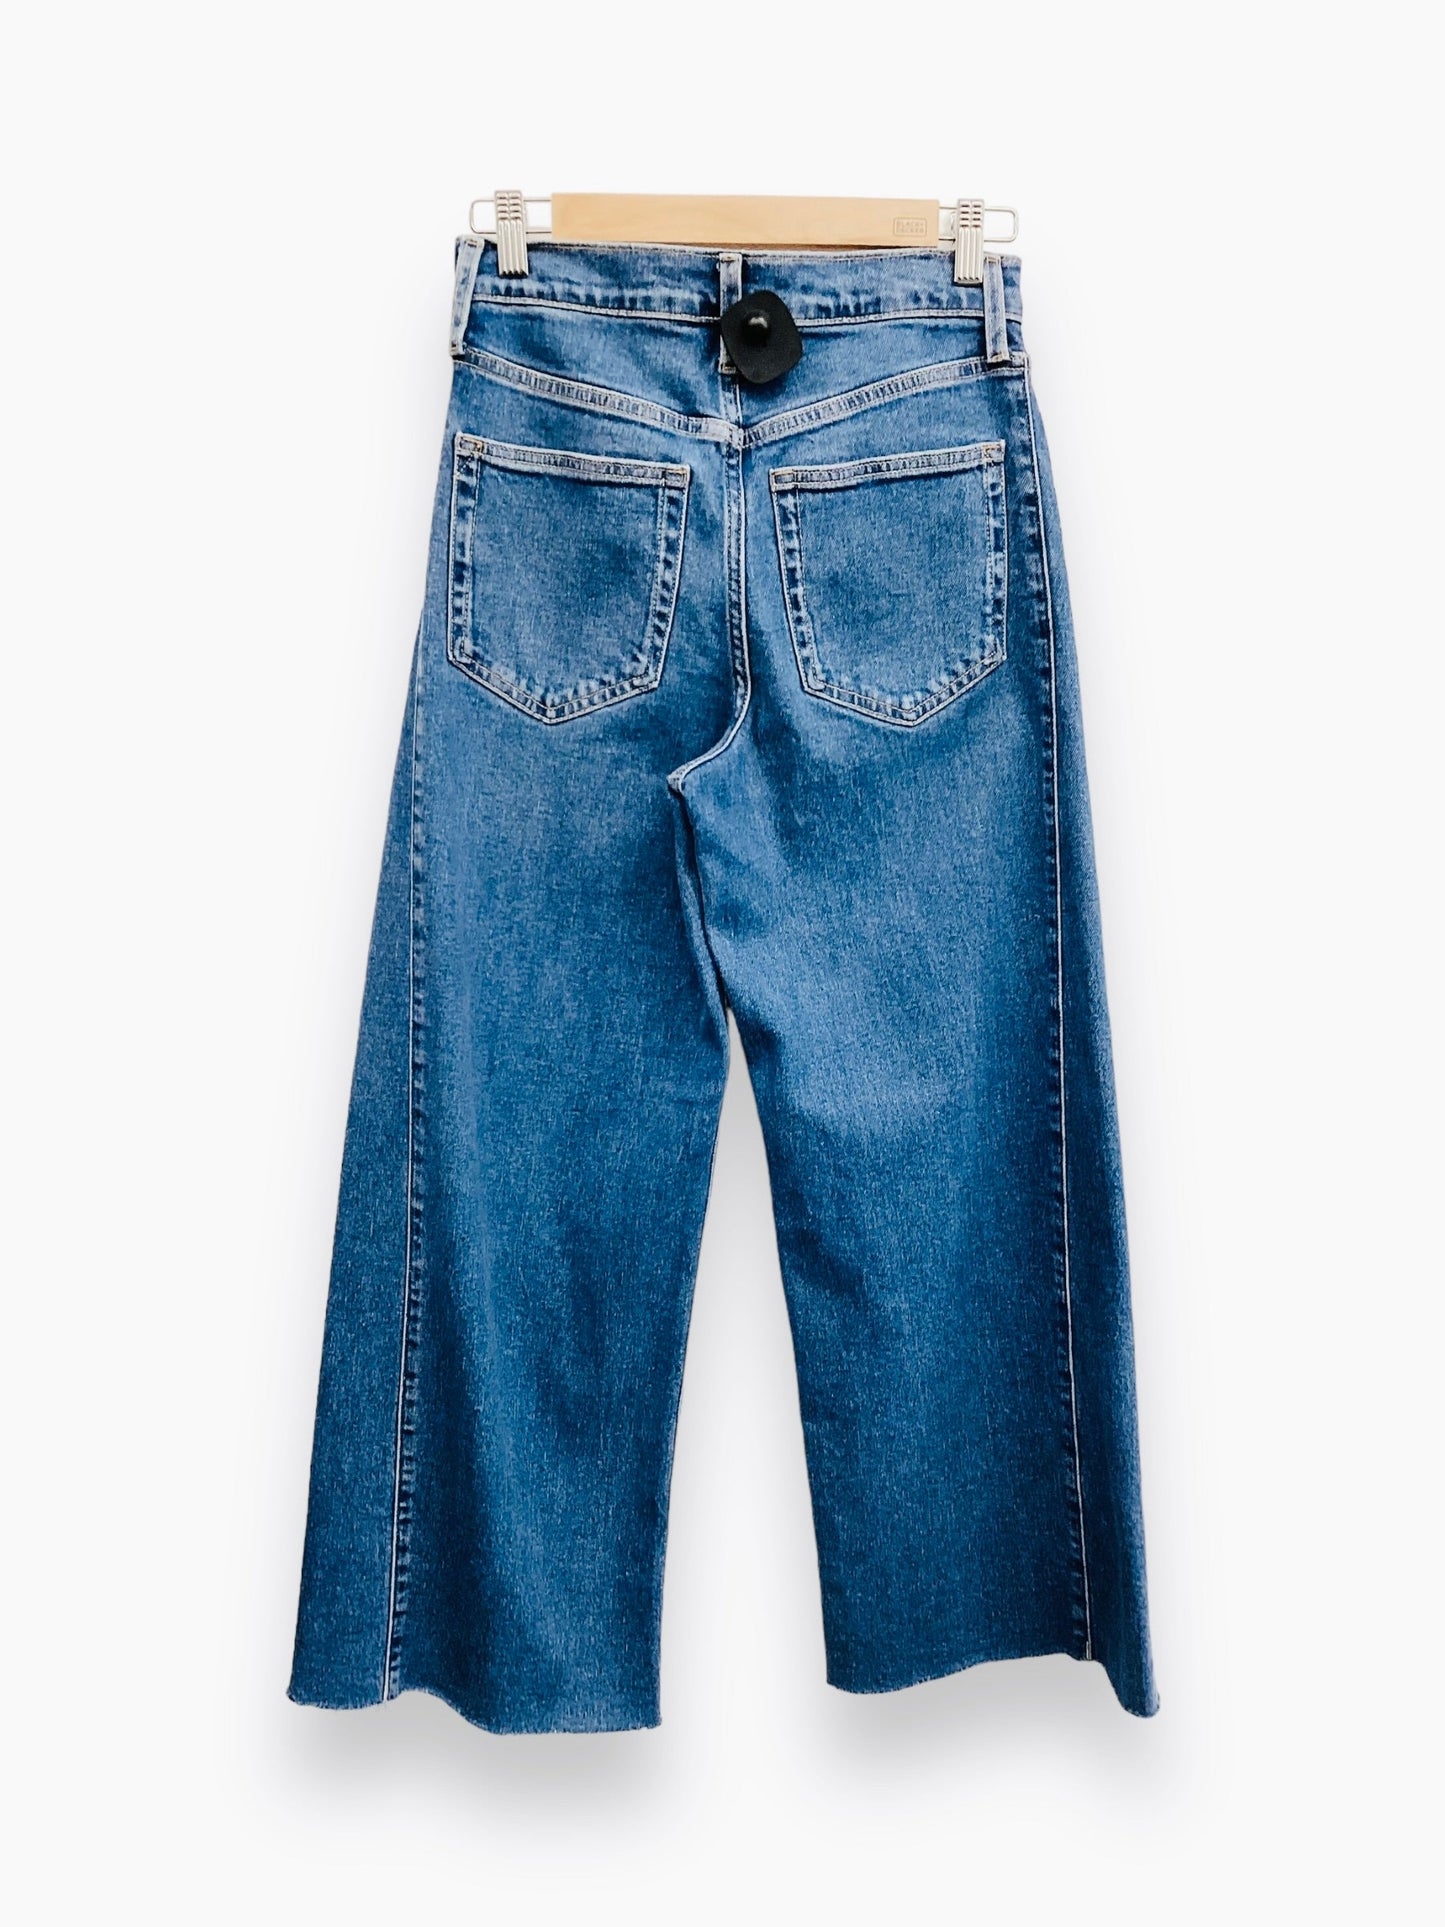 Blue Denim Jeans Flared Gap, Size 0